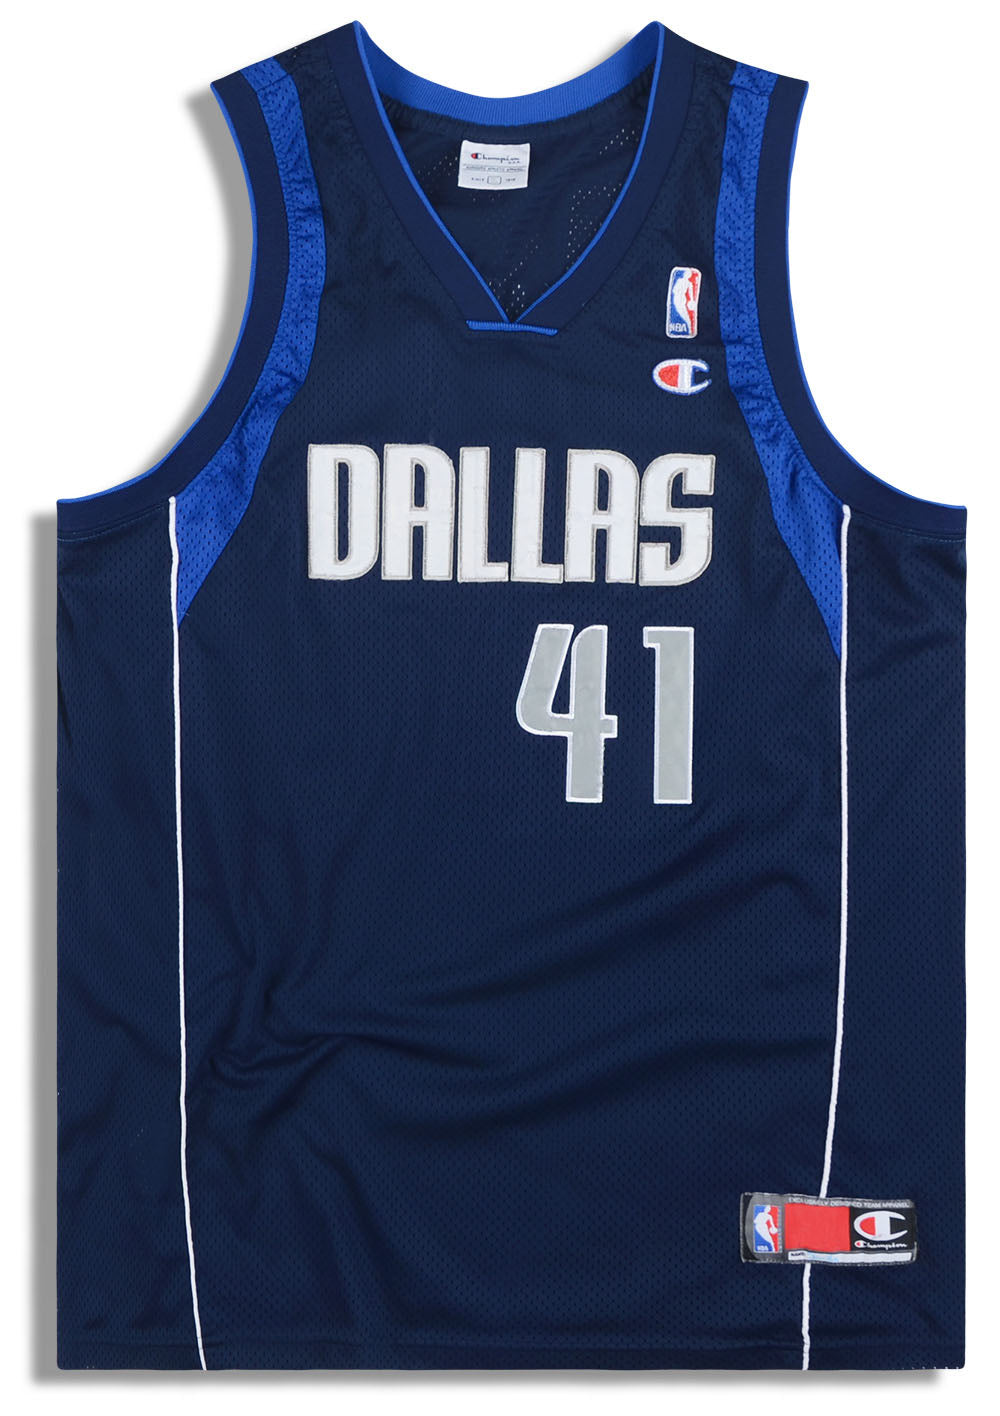 Classic Dirk Nowitzki #41 Dallas Mavericks Basketball Jerseys